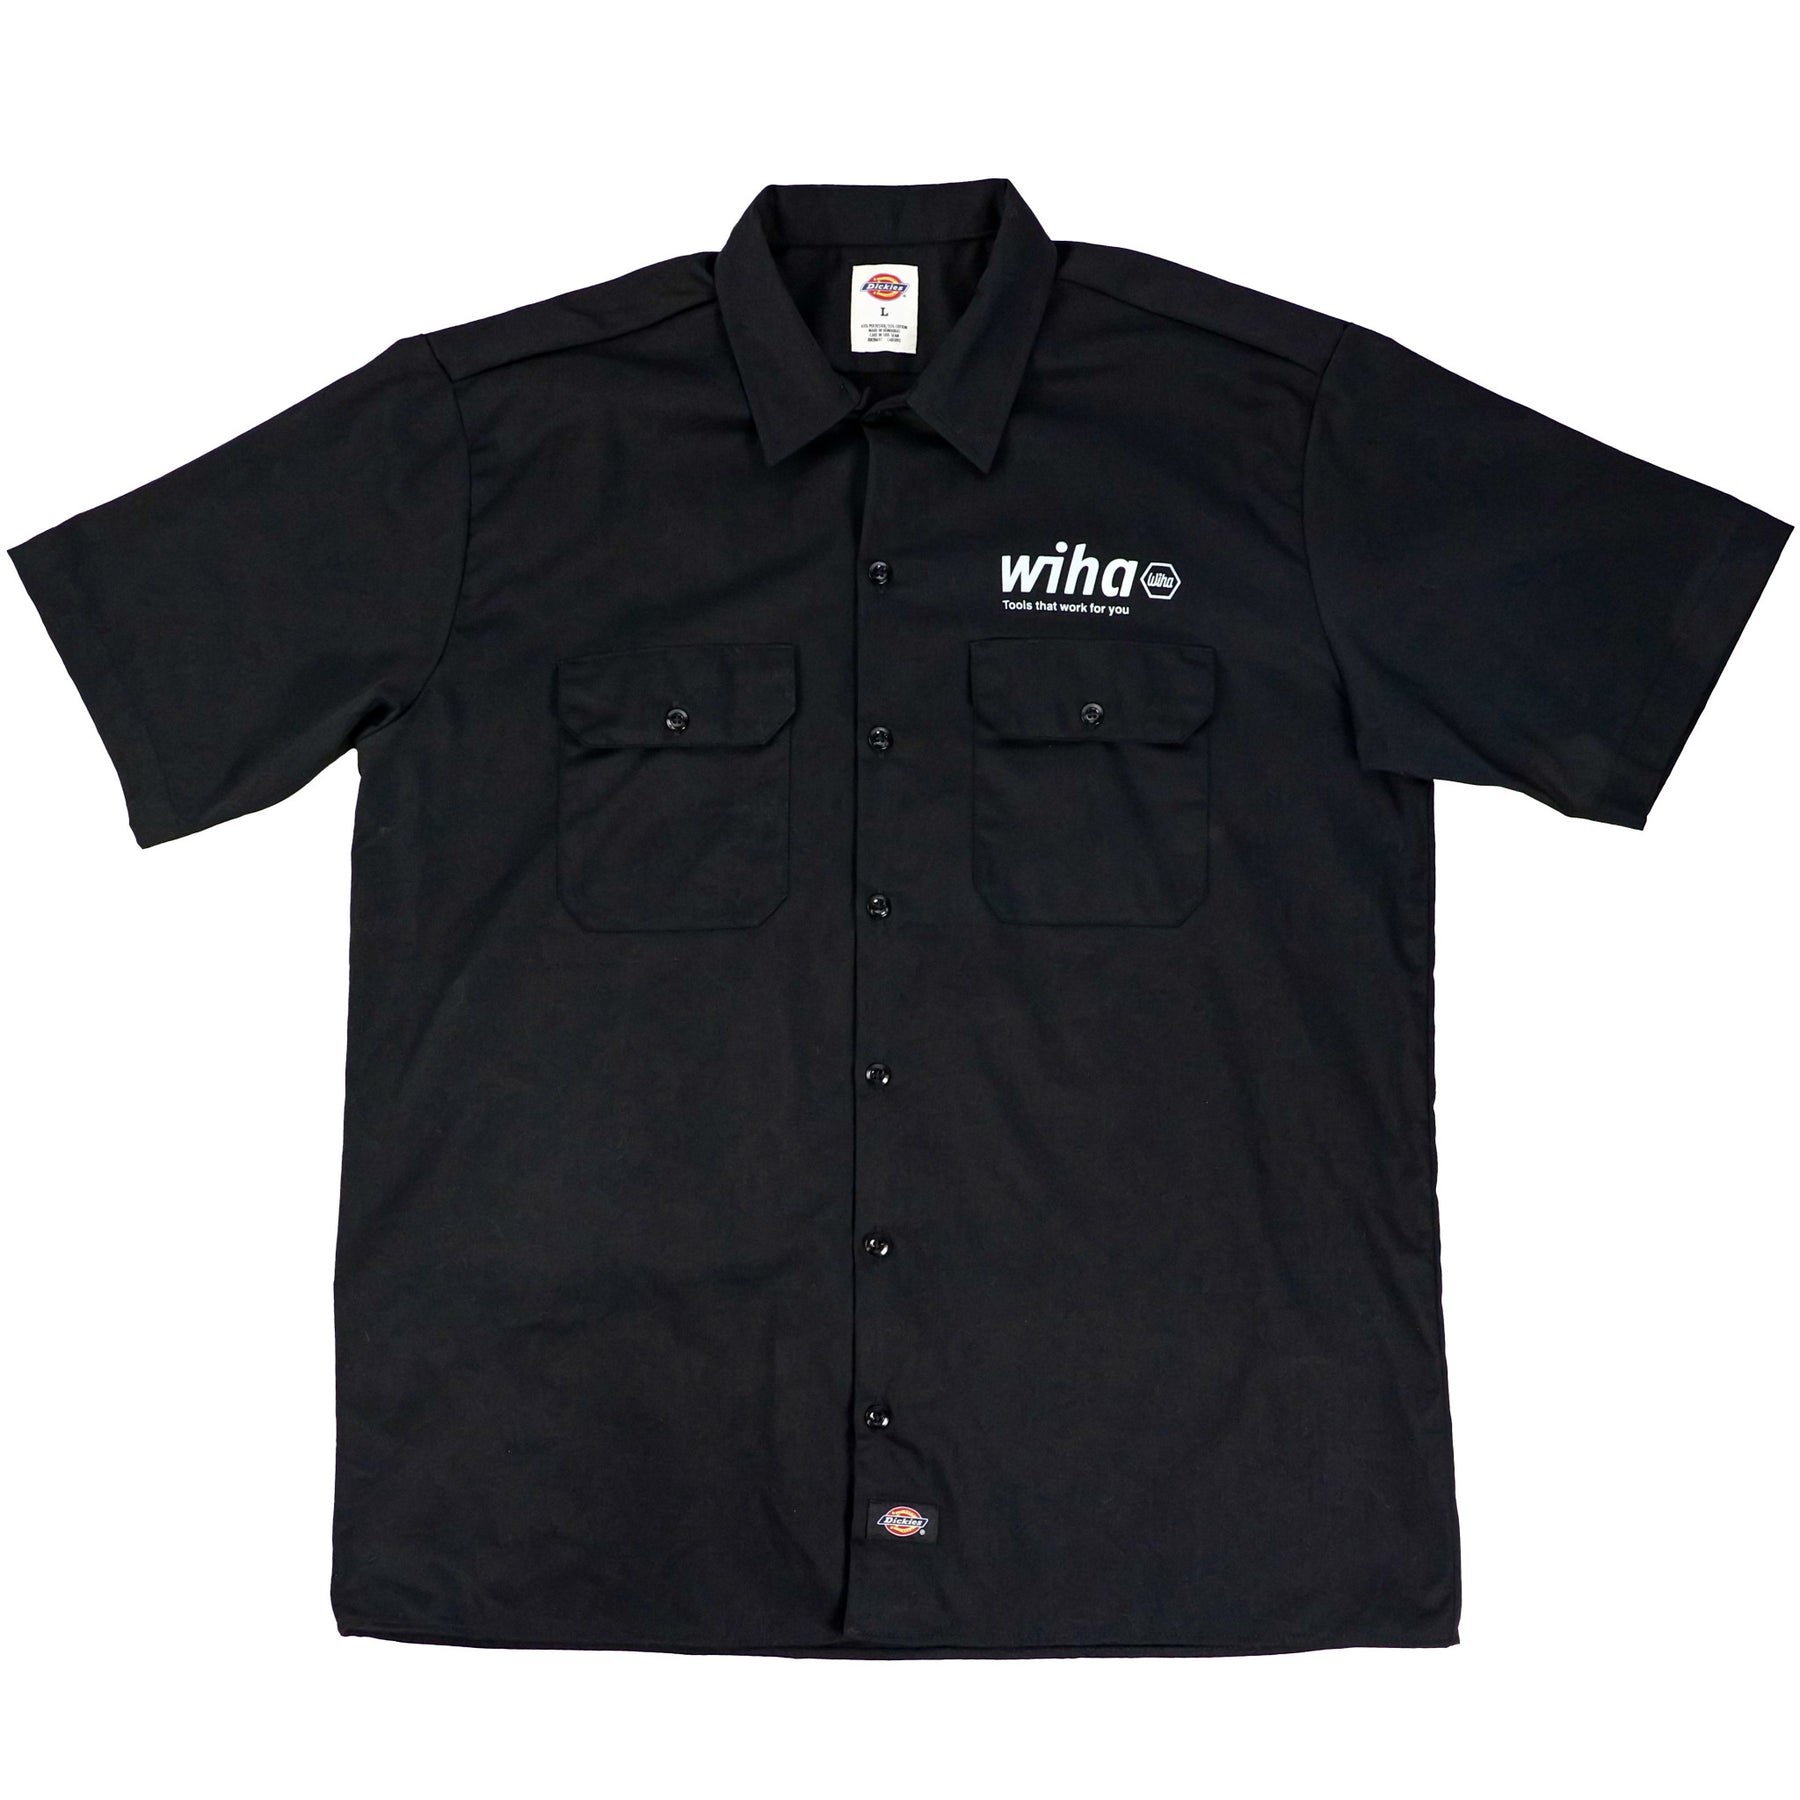 Wiha 91715 Wiha Men's Dickies Short Sleeve Work Shirt Black XLarge